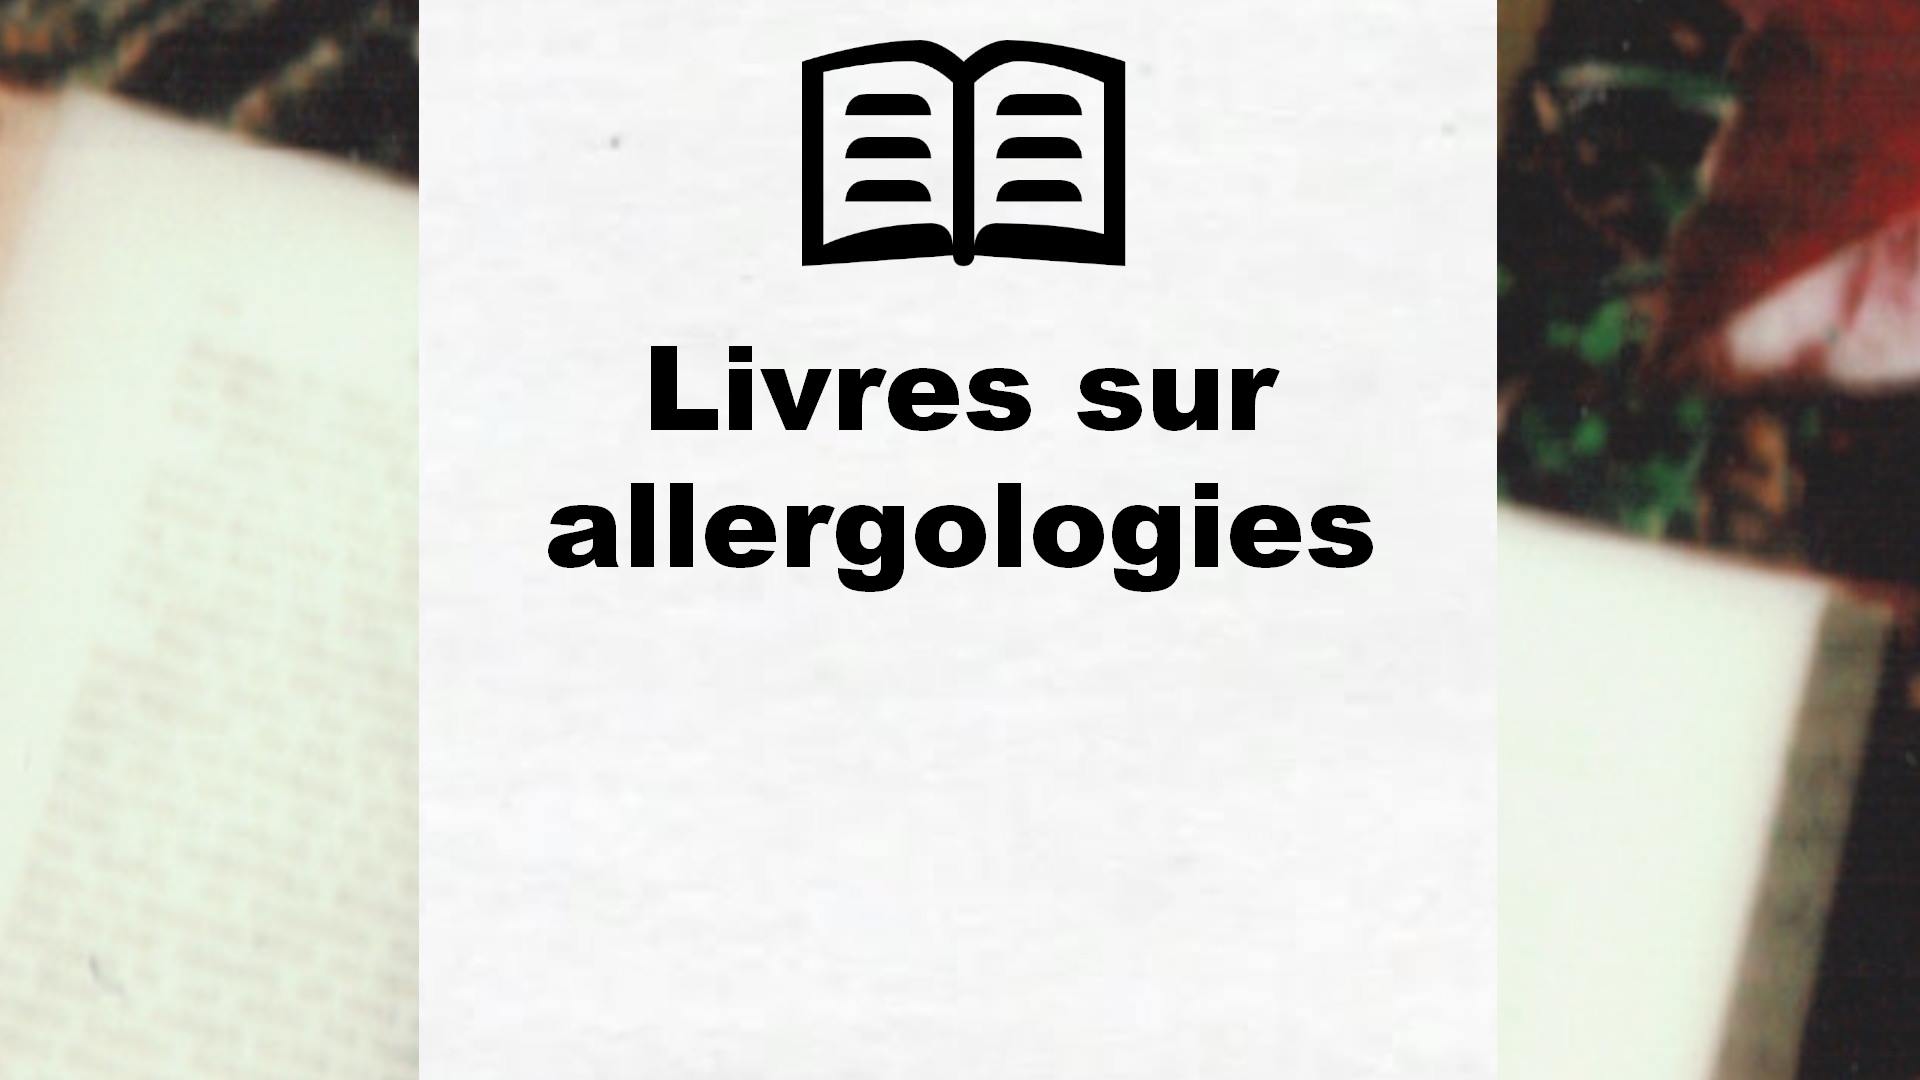 Livres sur allergologies